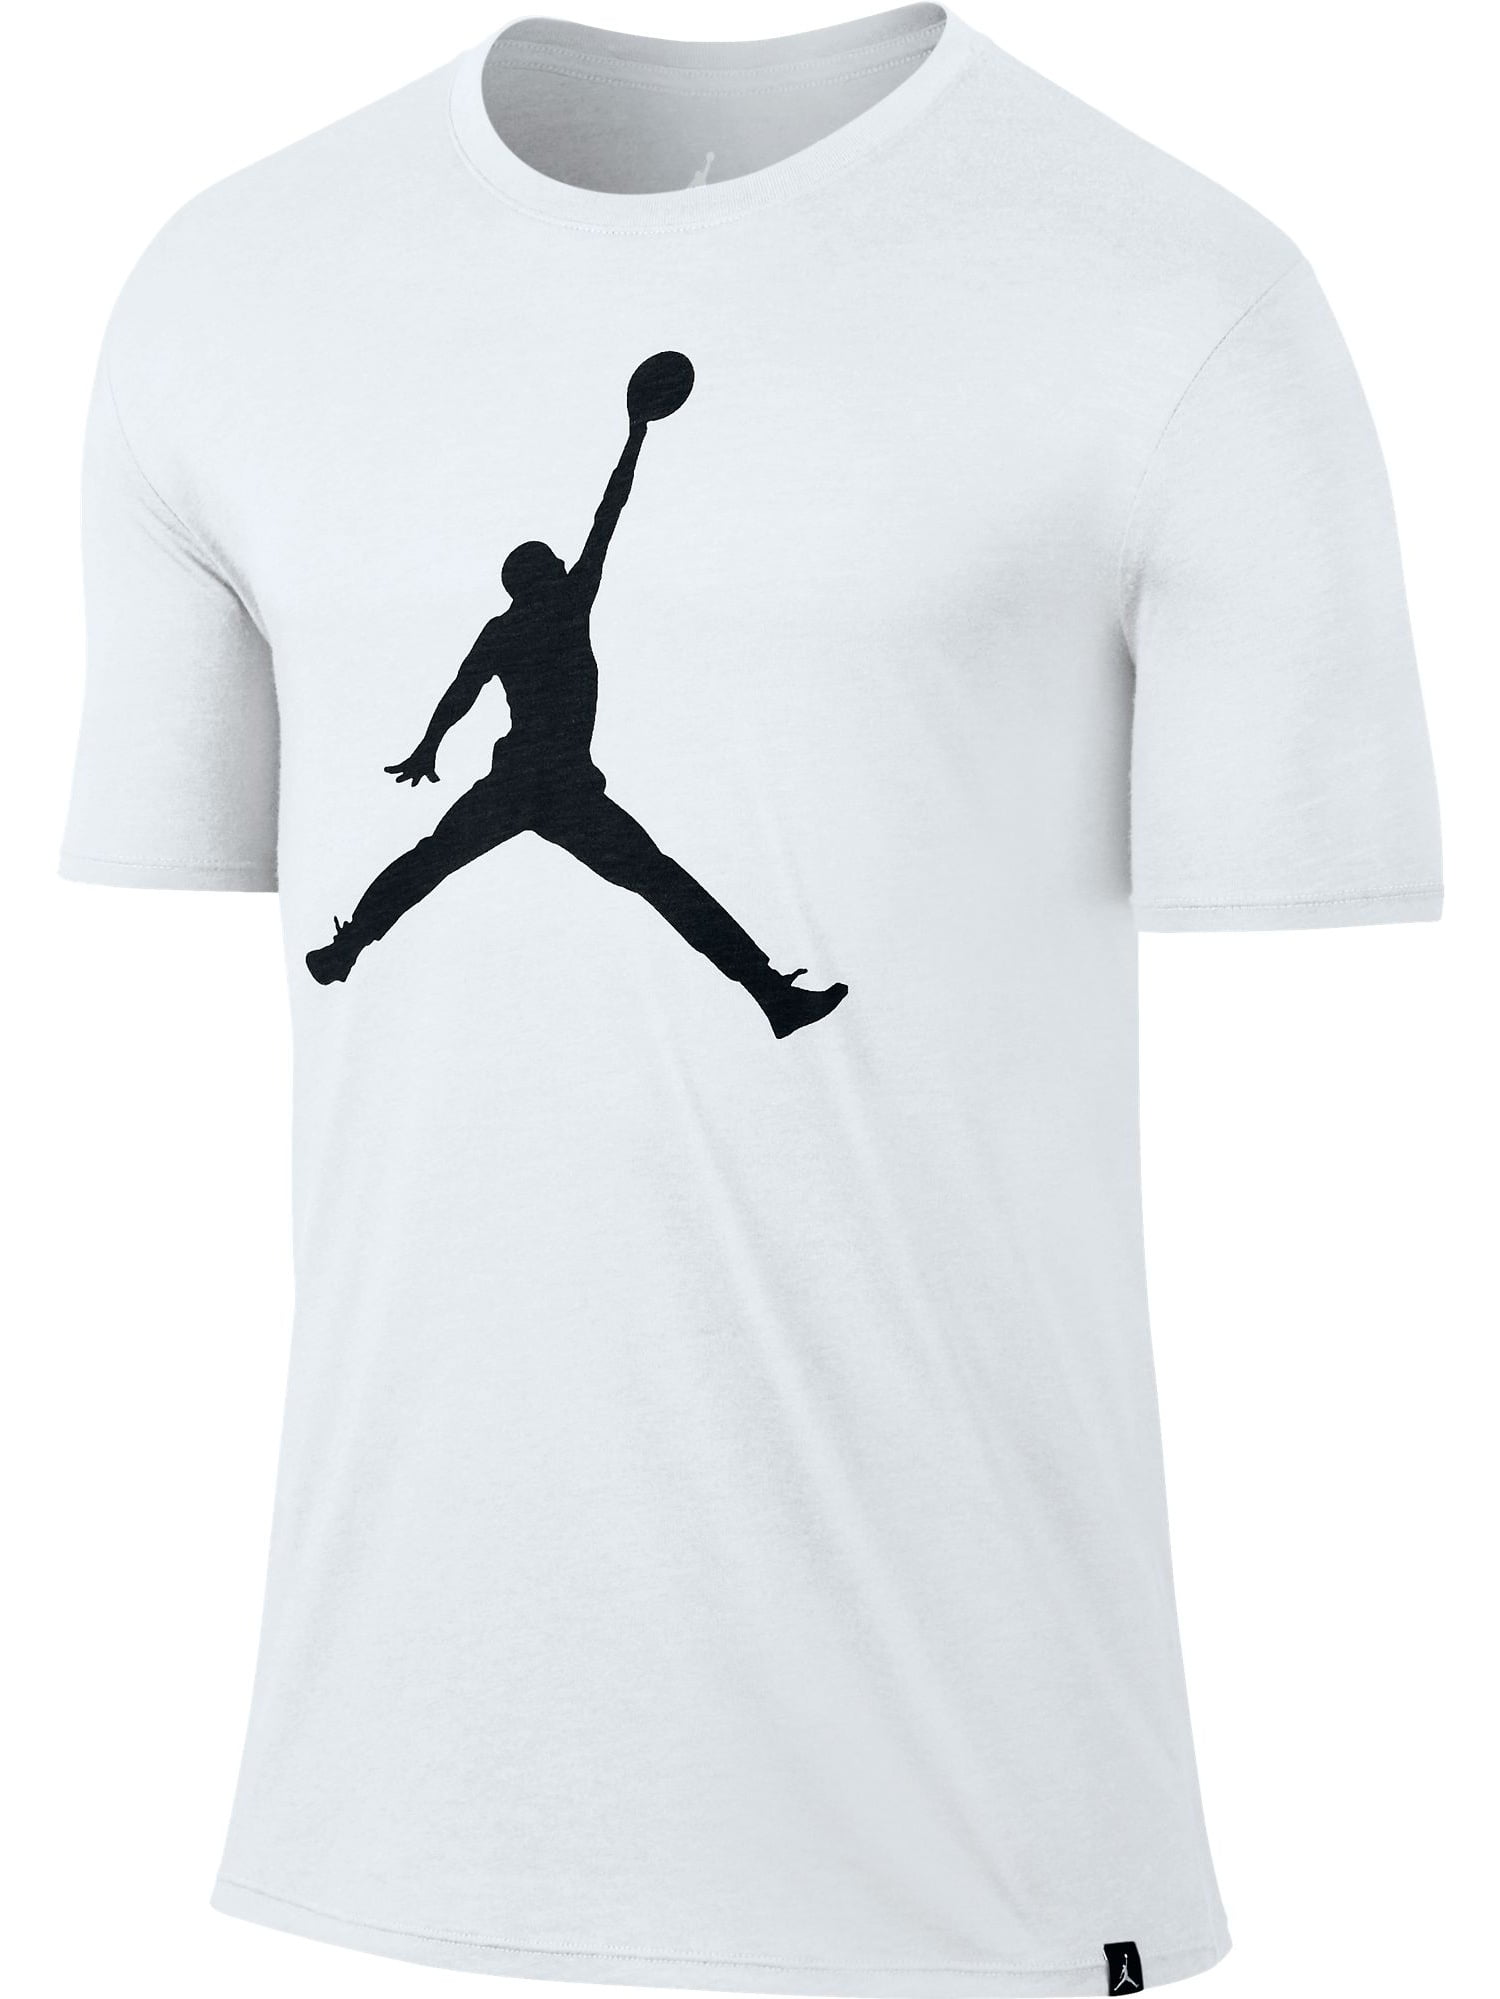 Jordan Iconic Jumpman Logo Men's T-Shirt White/Black 834473-100 ...